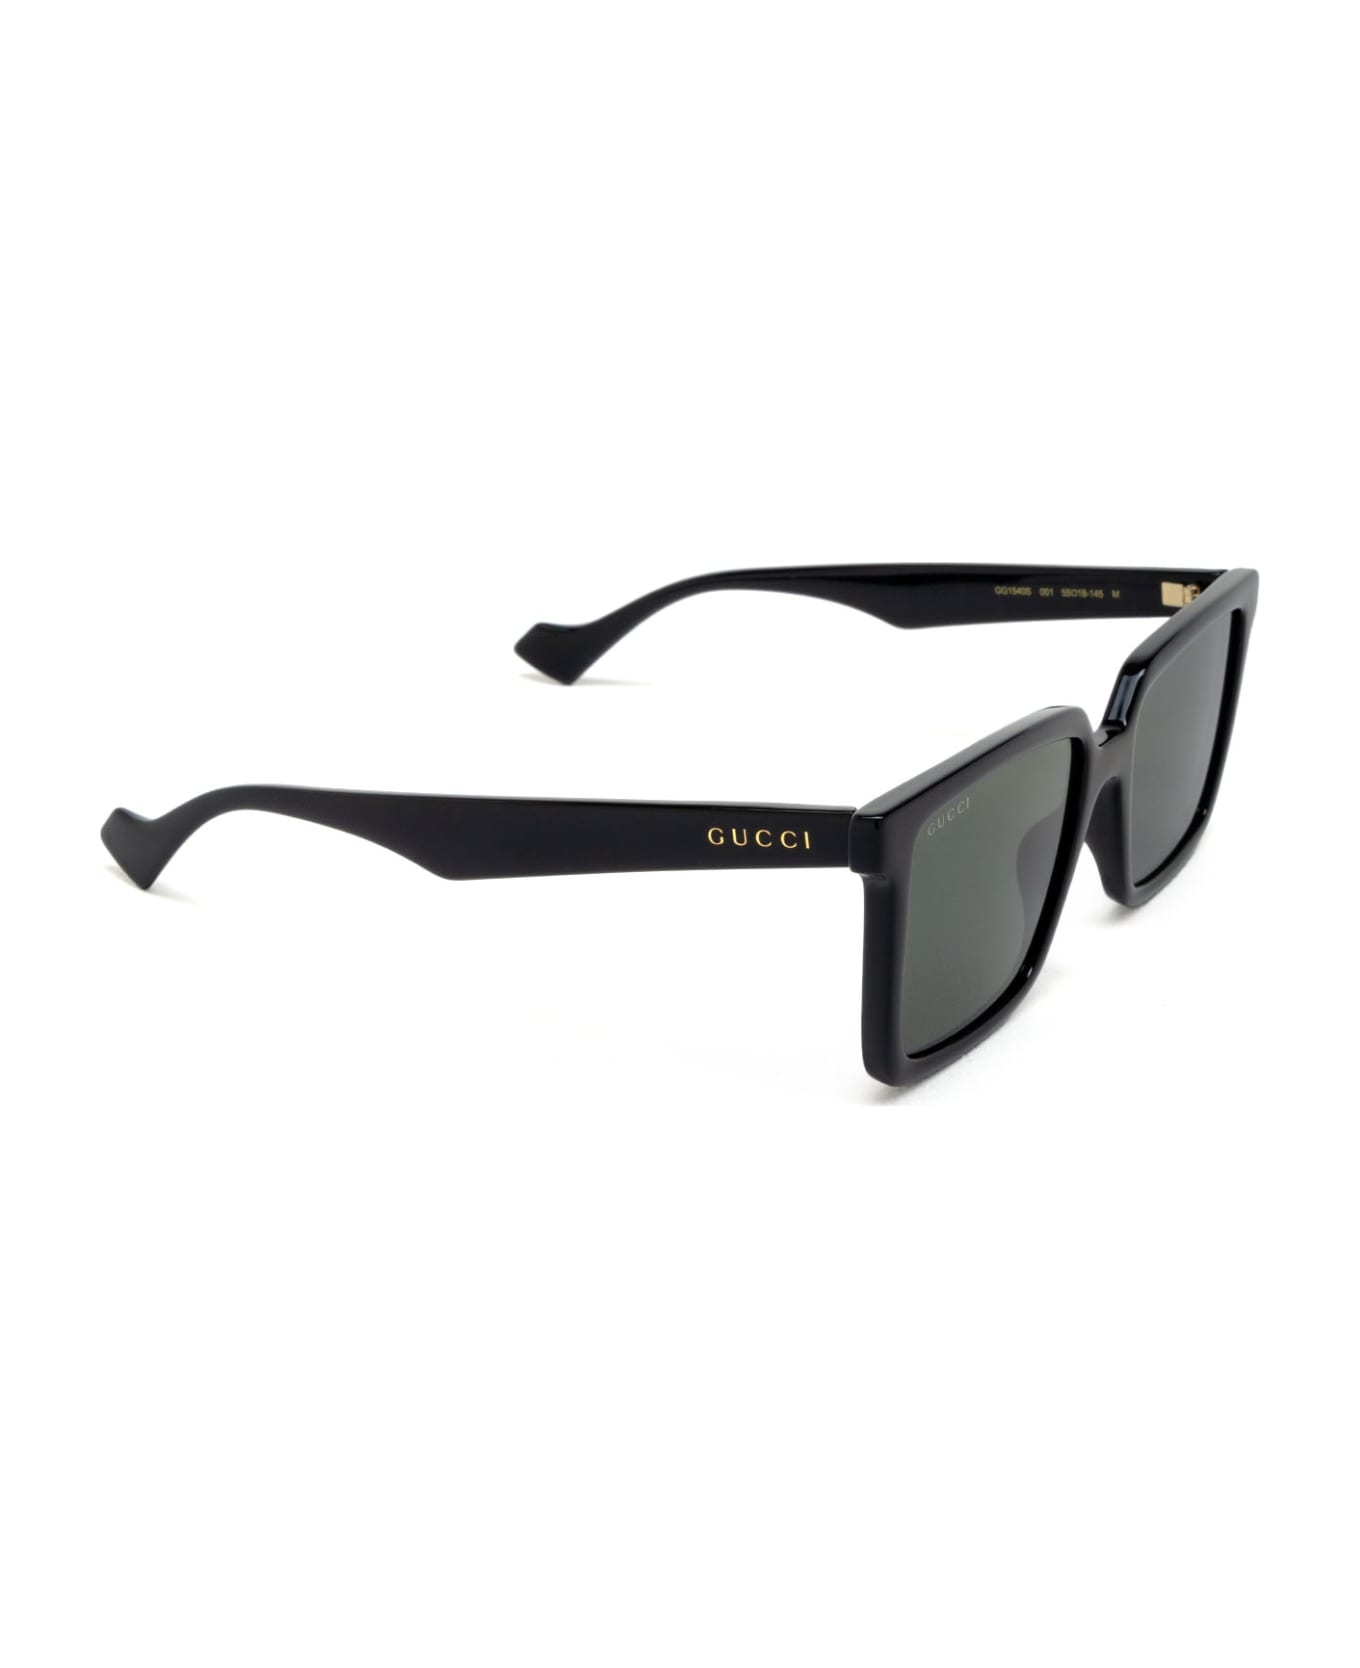 Gucci Eyewear Gg1540s Black Sunglasses - Black